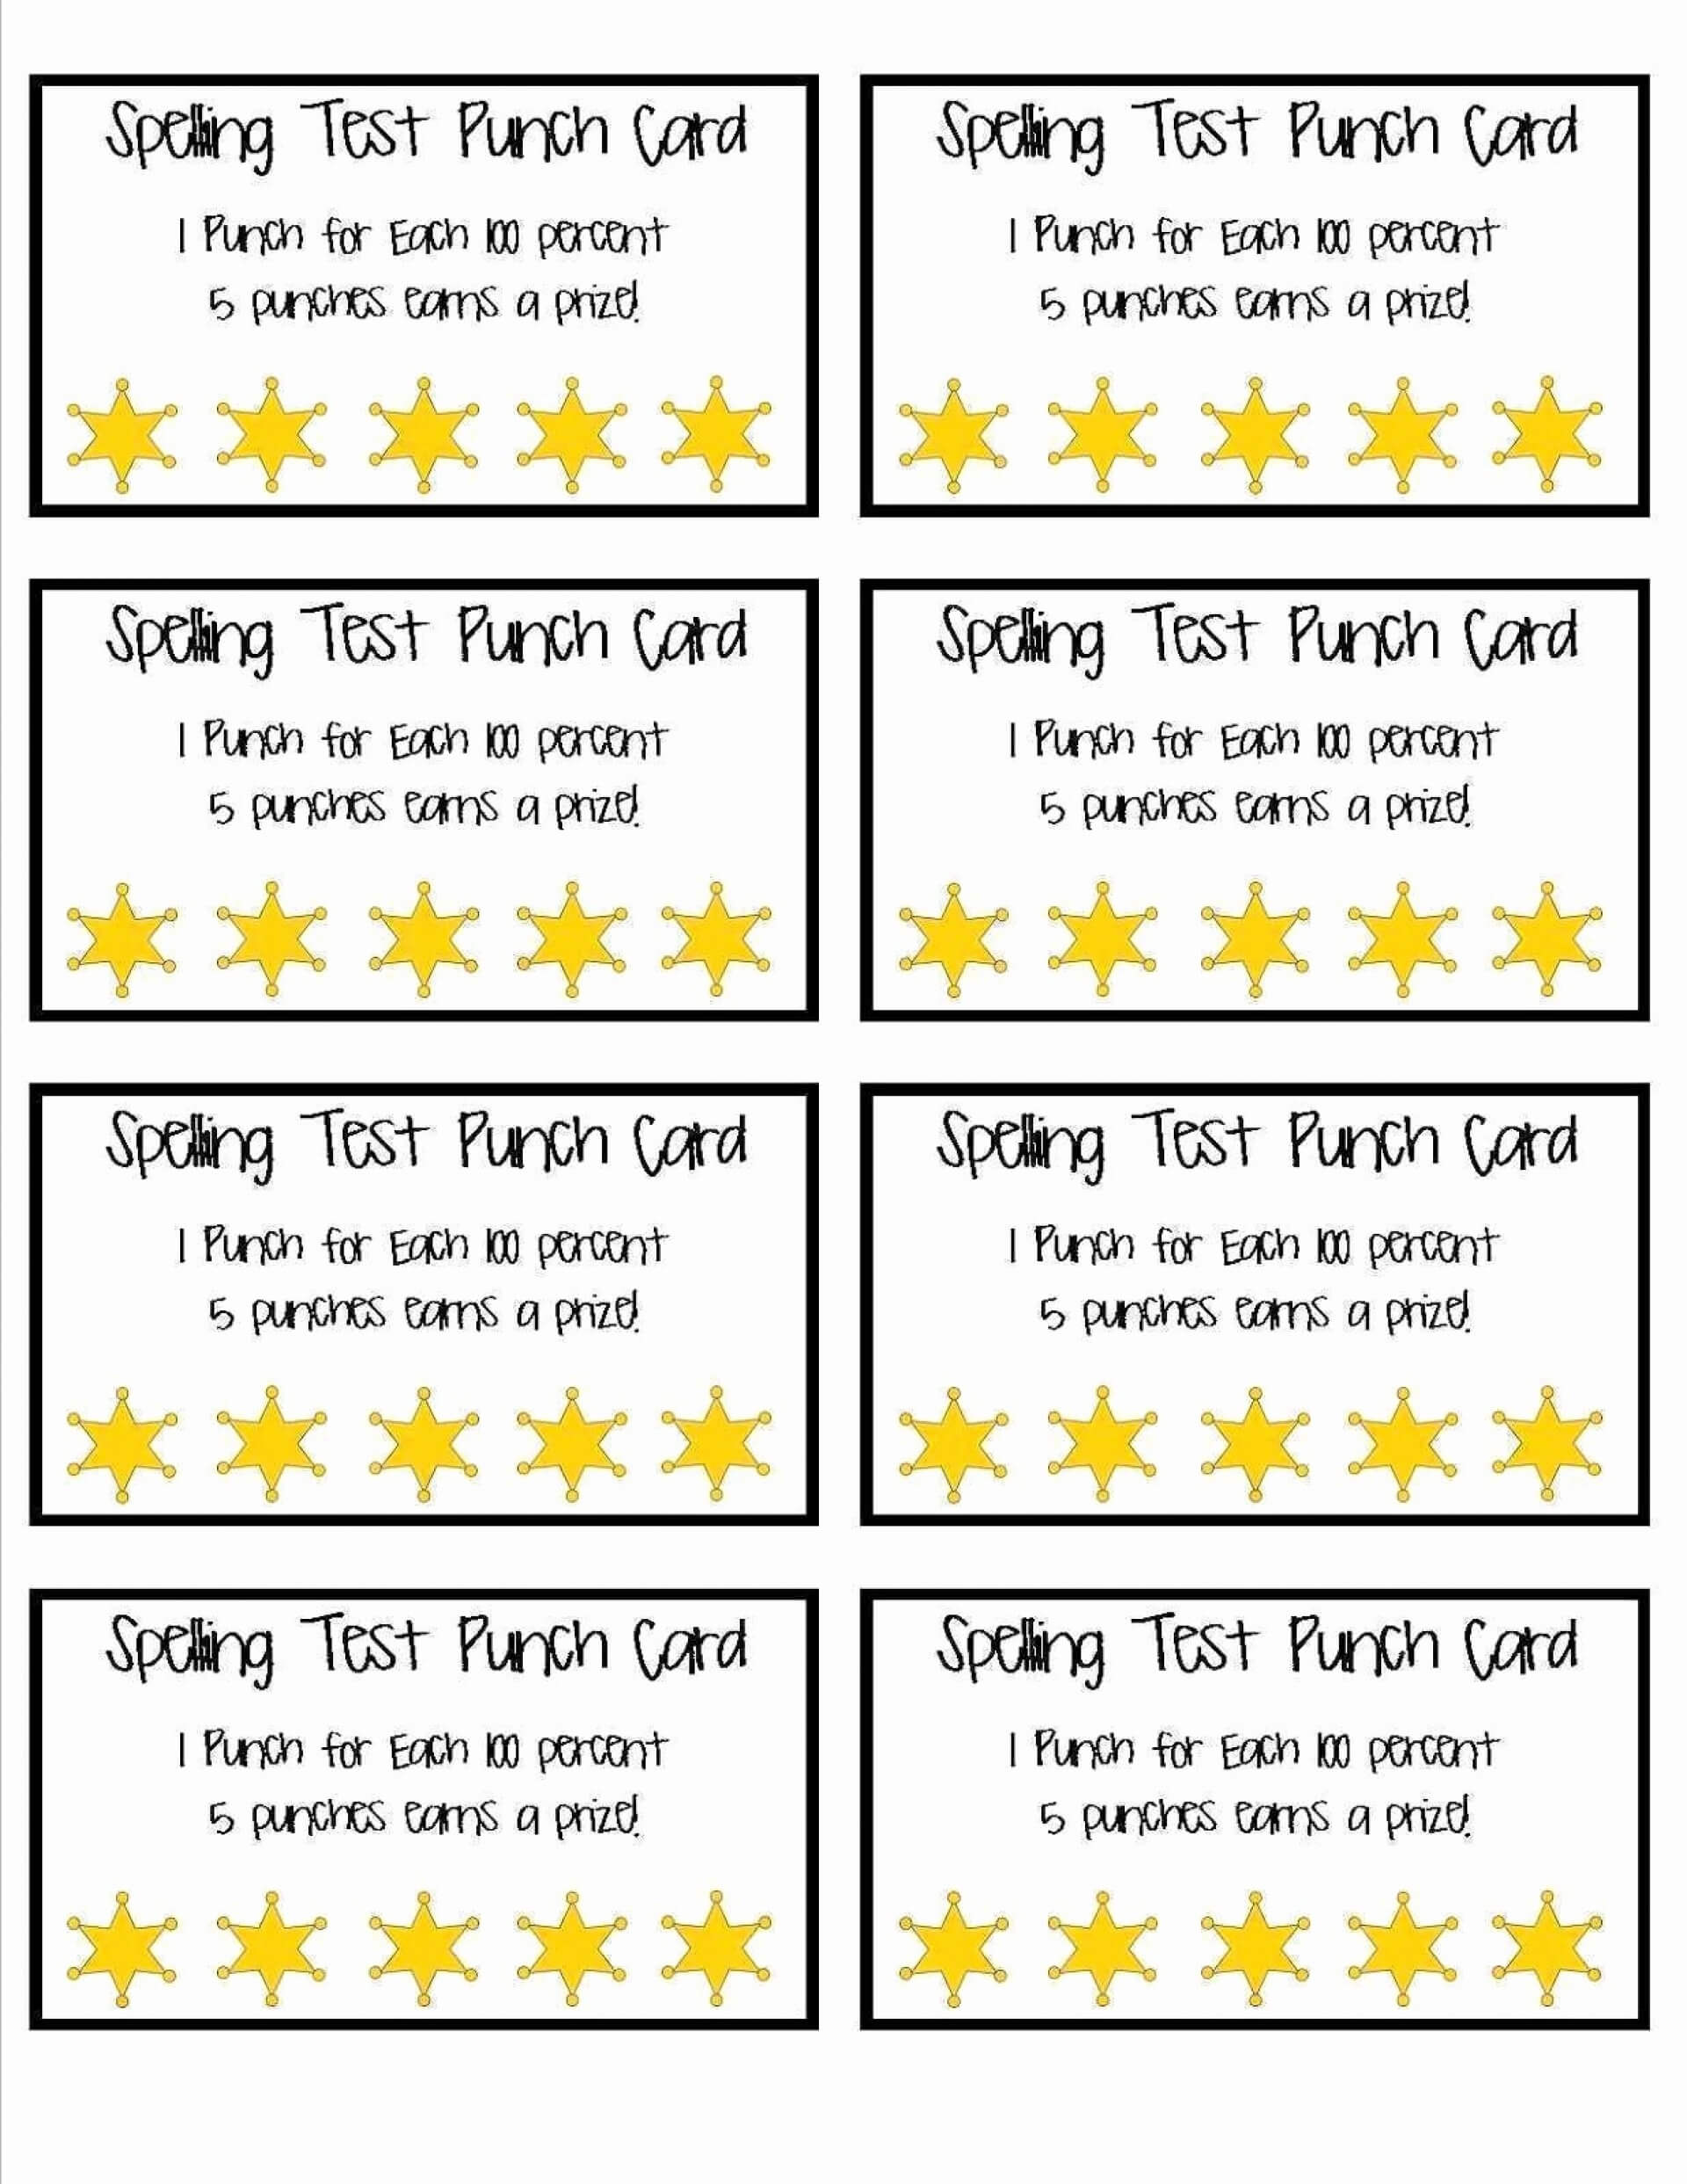 023 Template Ideas Behavior Punch Cards Pinterest Card Throughout Business Punch Card Template Free